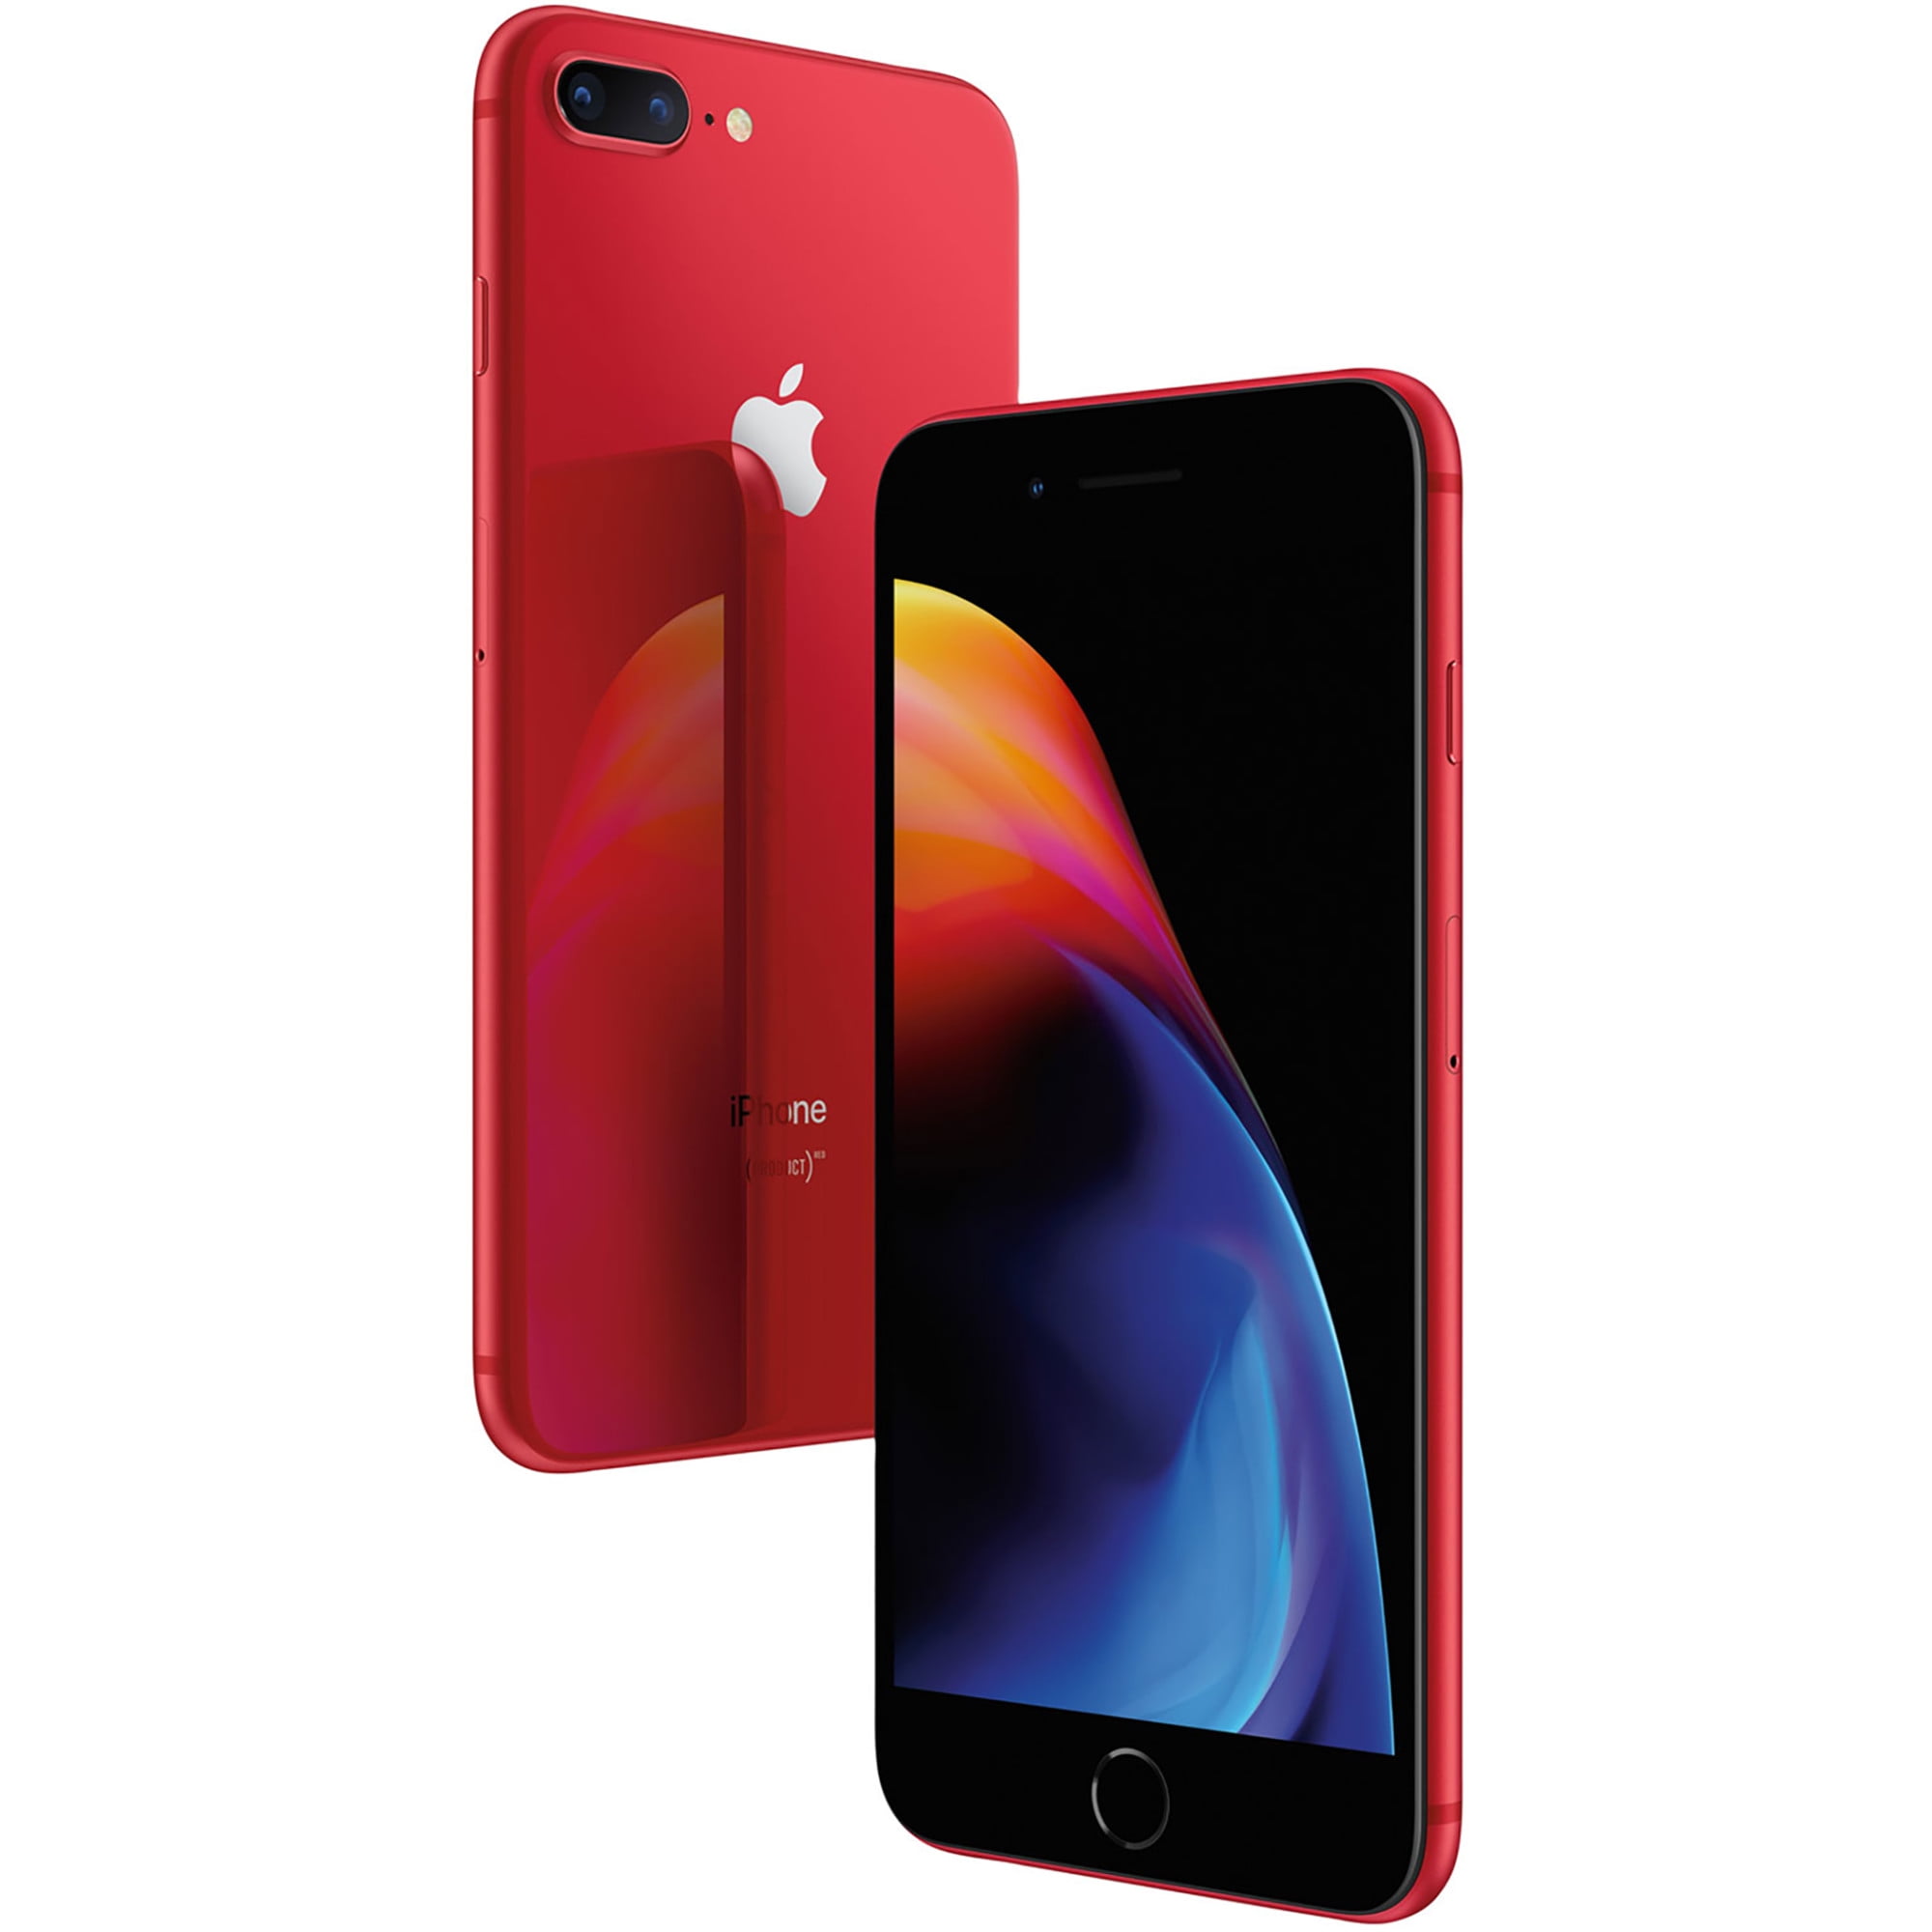 Apple iPhone 8 Plus 256GB Fully Unlocked (Verizon + Sprint + GSM Unlocked) - Red (Used